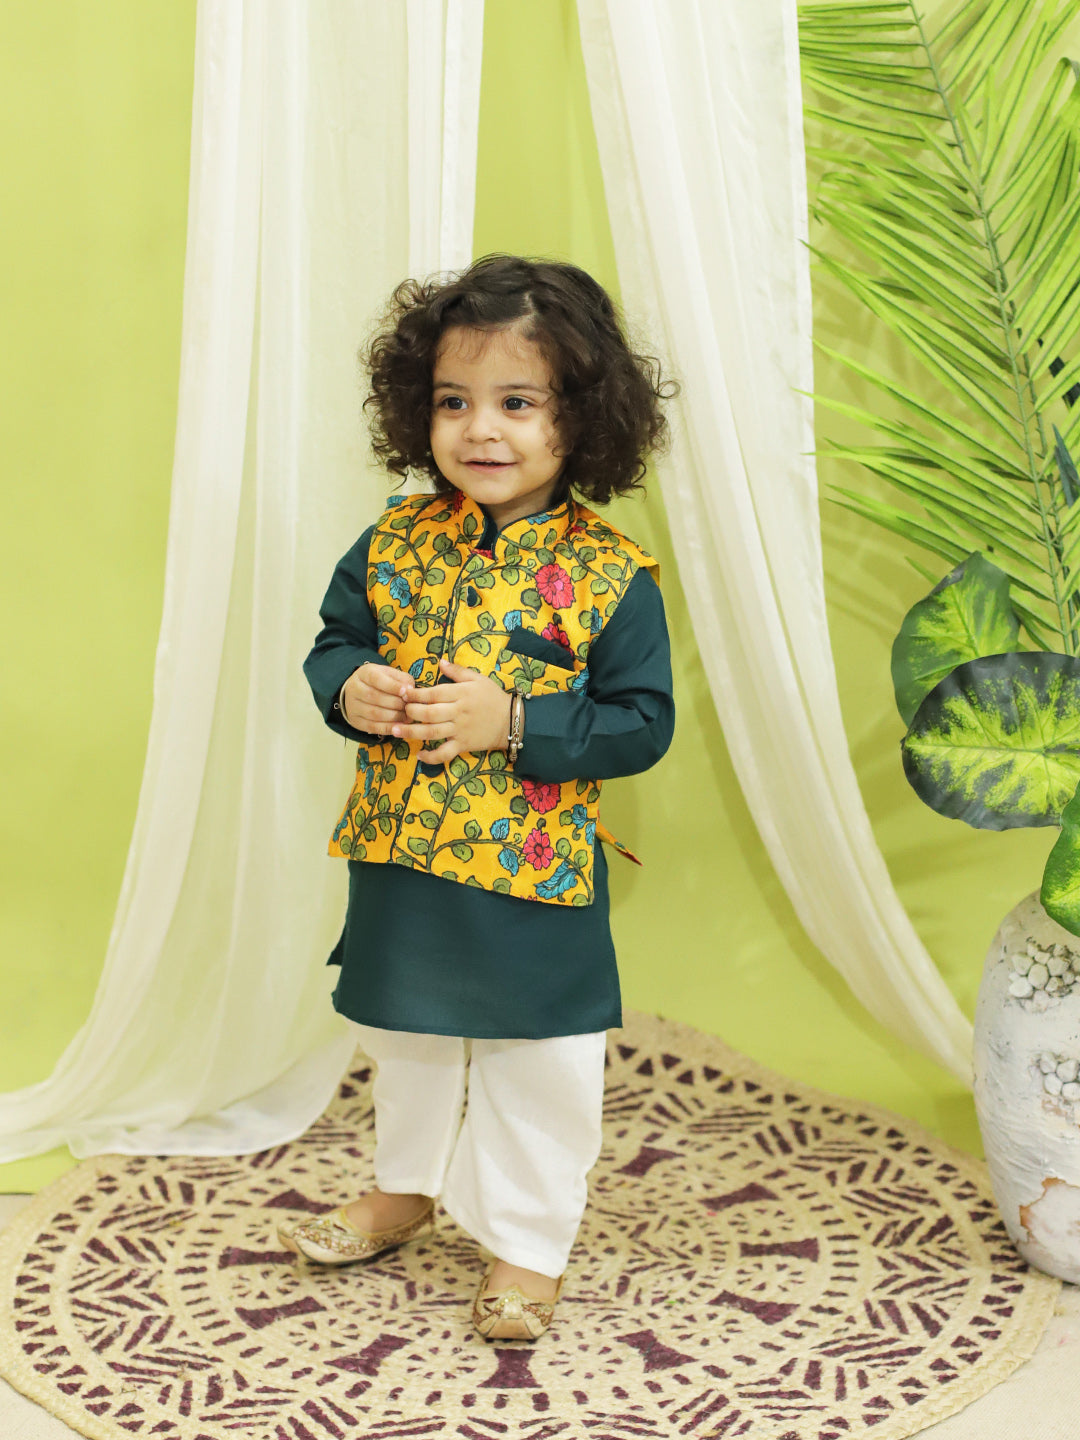 BownBee Kalamkari Print Party Dress Gown for Girls and Printed Jacket with Kurta Pajama for Boys- Yellow